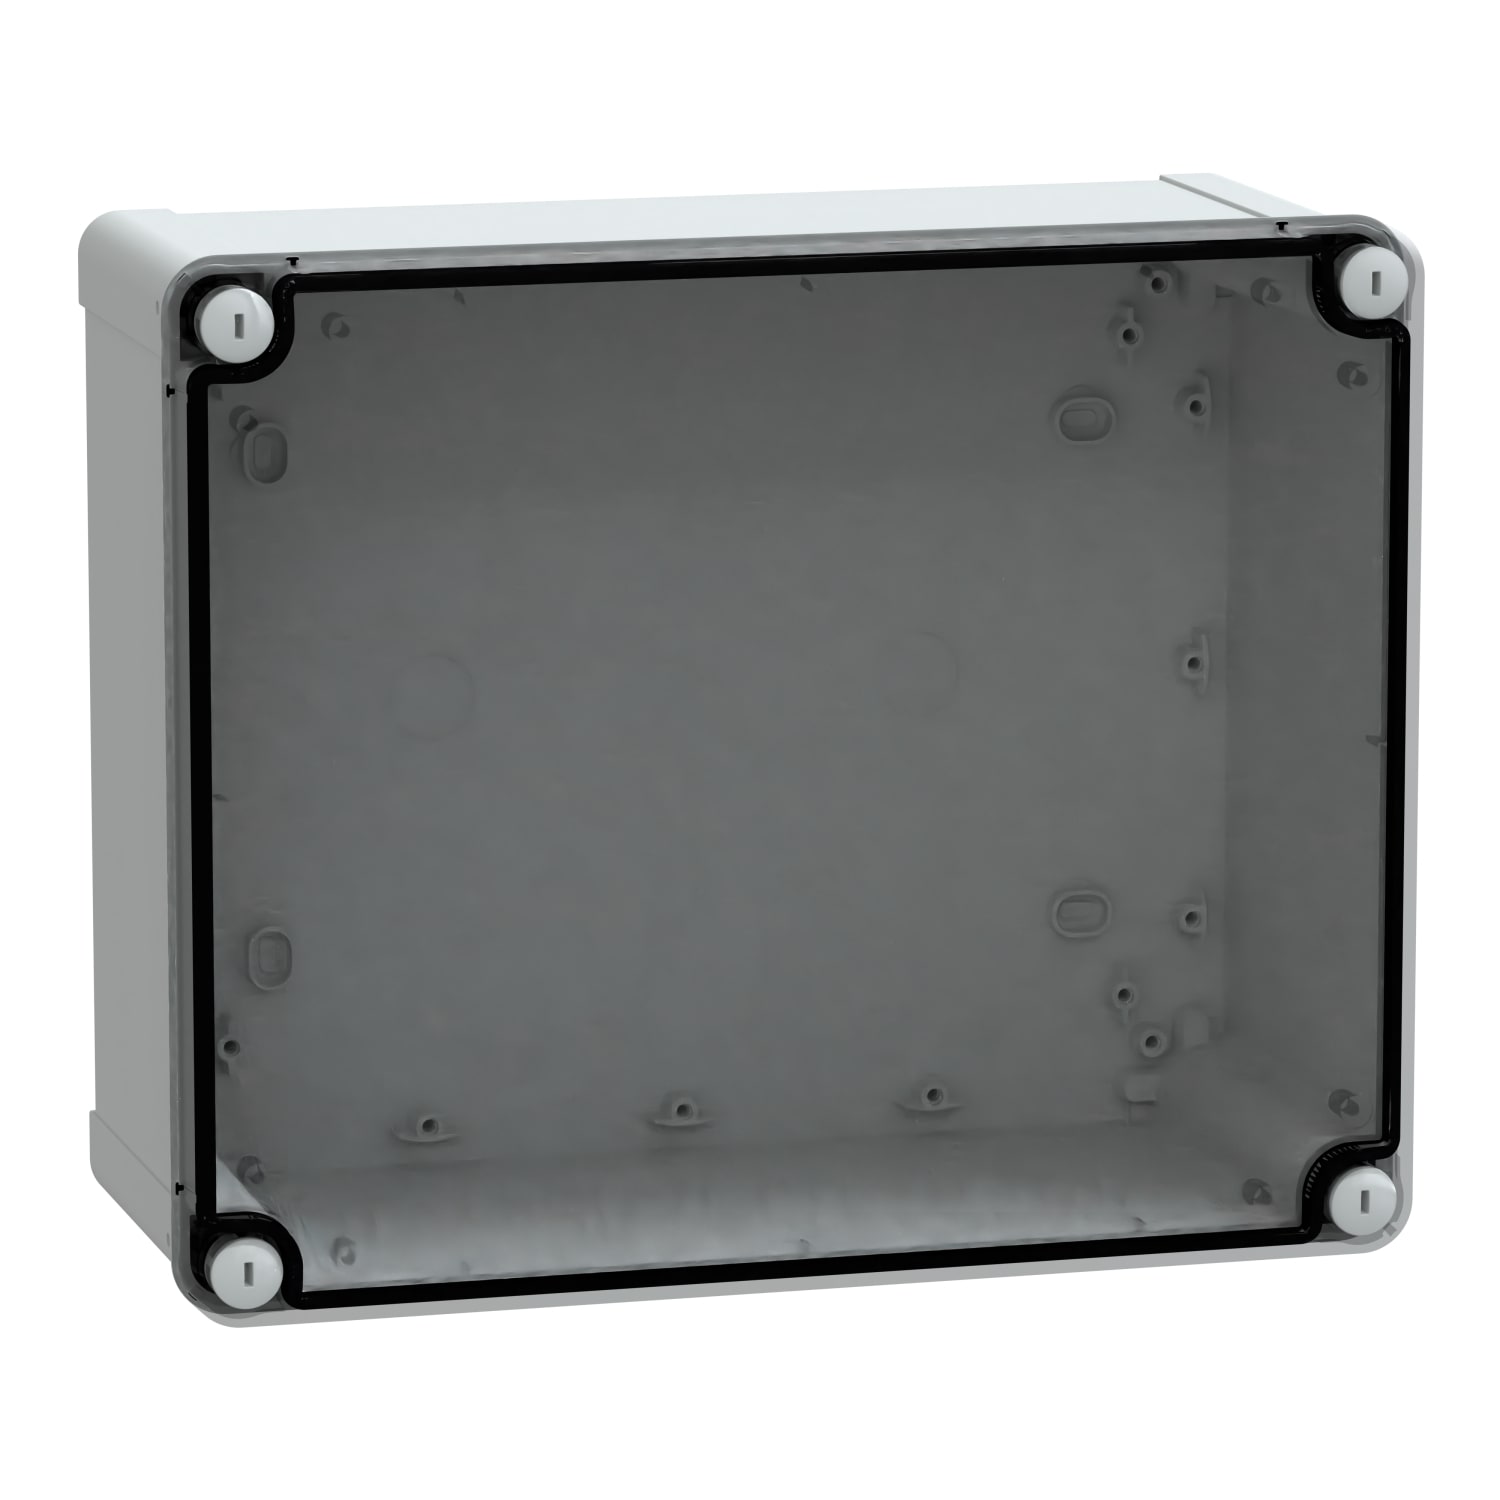 Schneider Electric - Thalassa - boite industrielle - transparente - 291x241x128mm - ABS